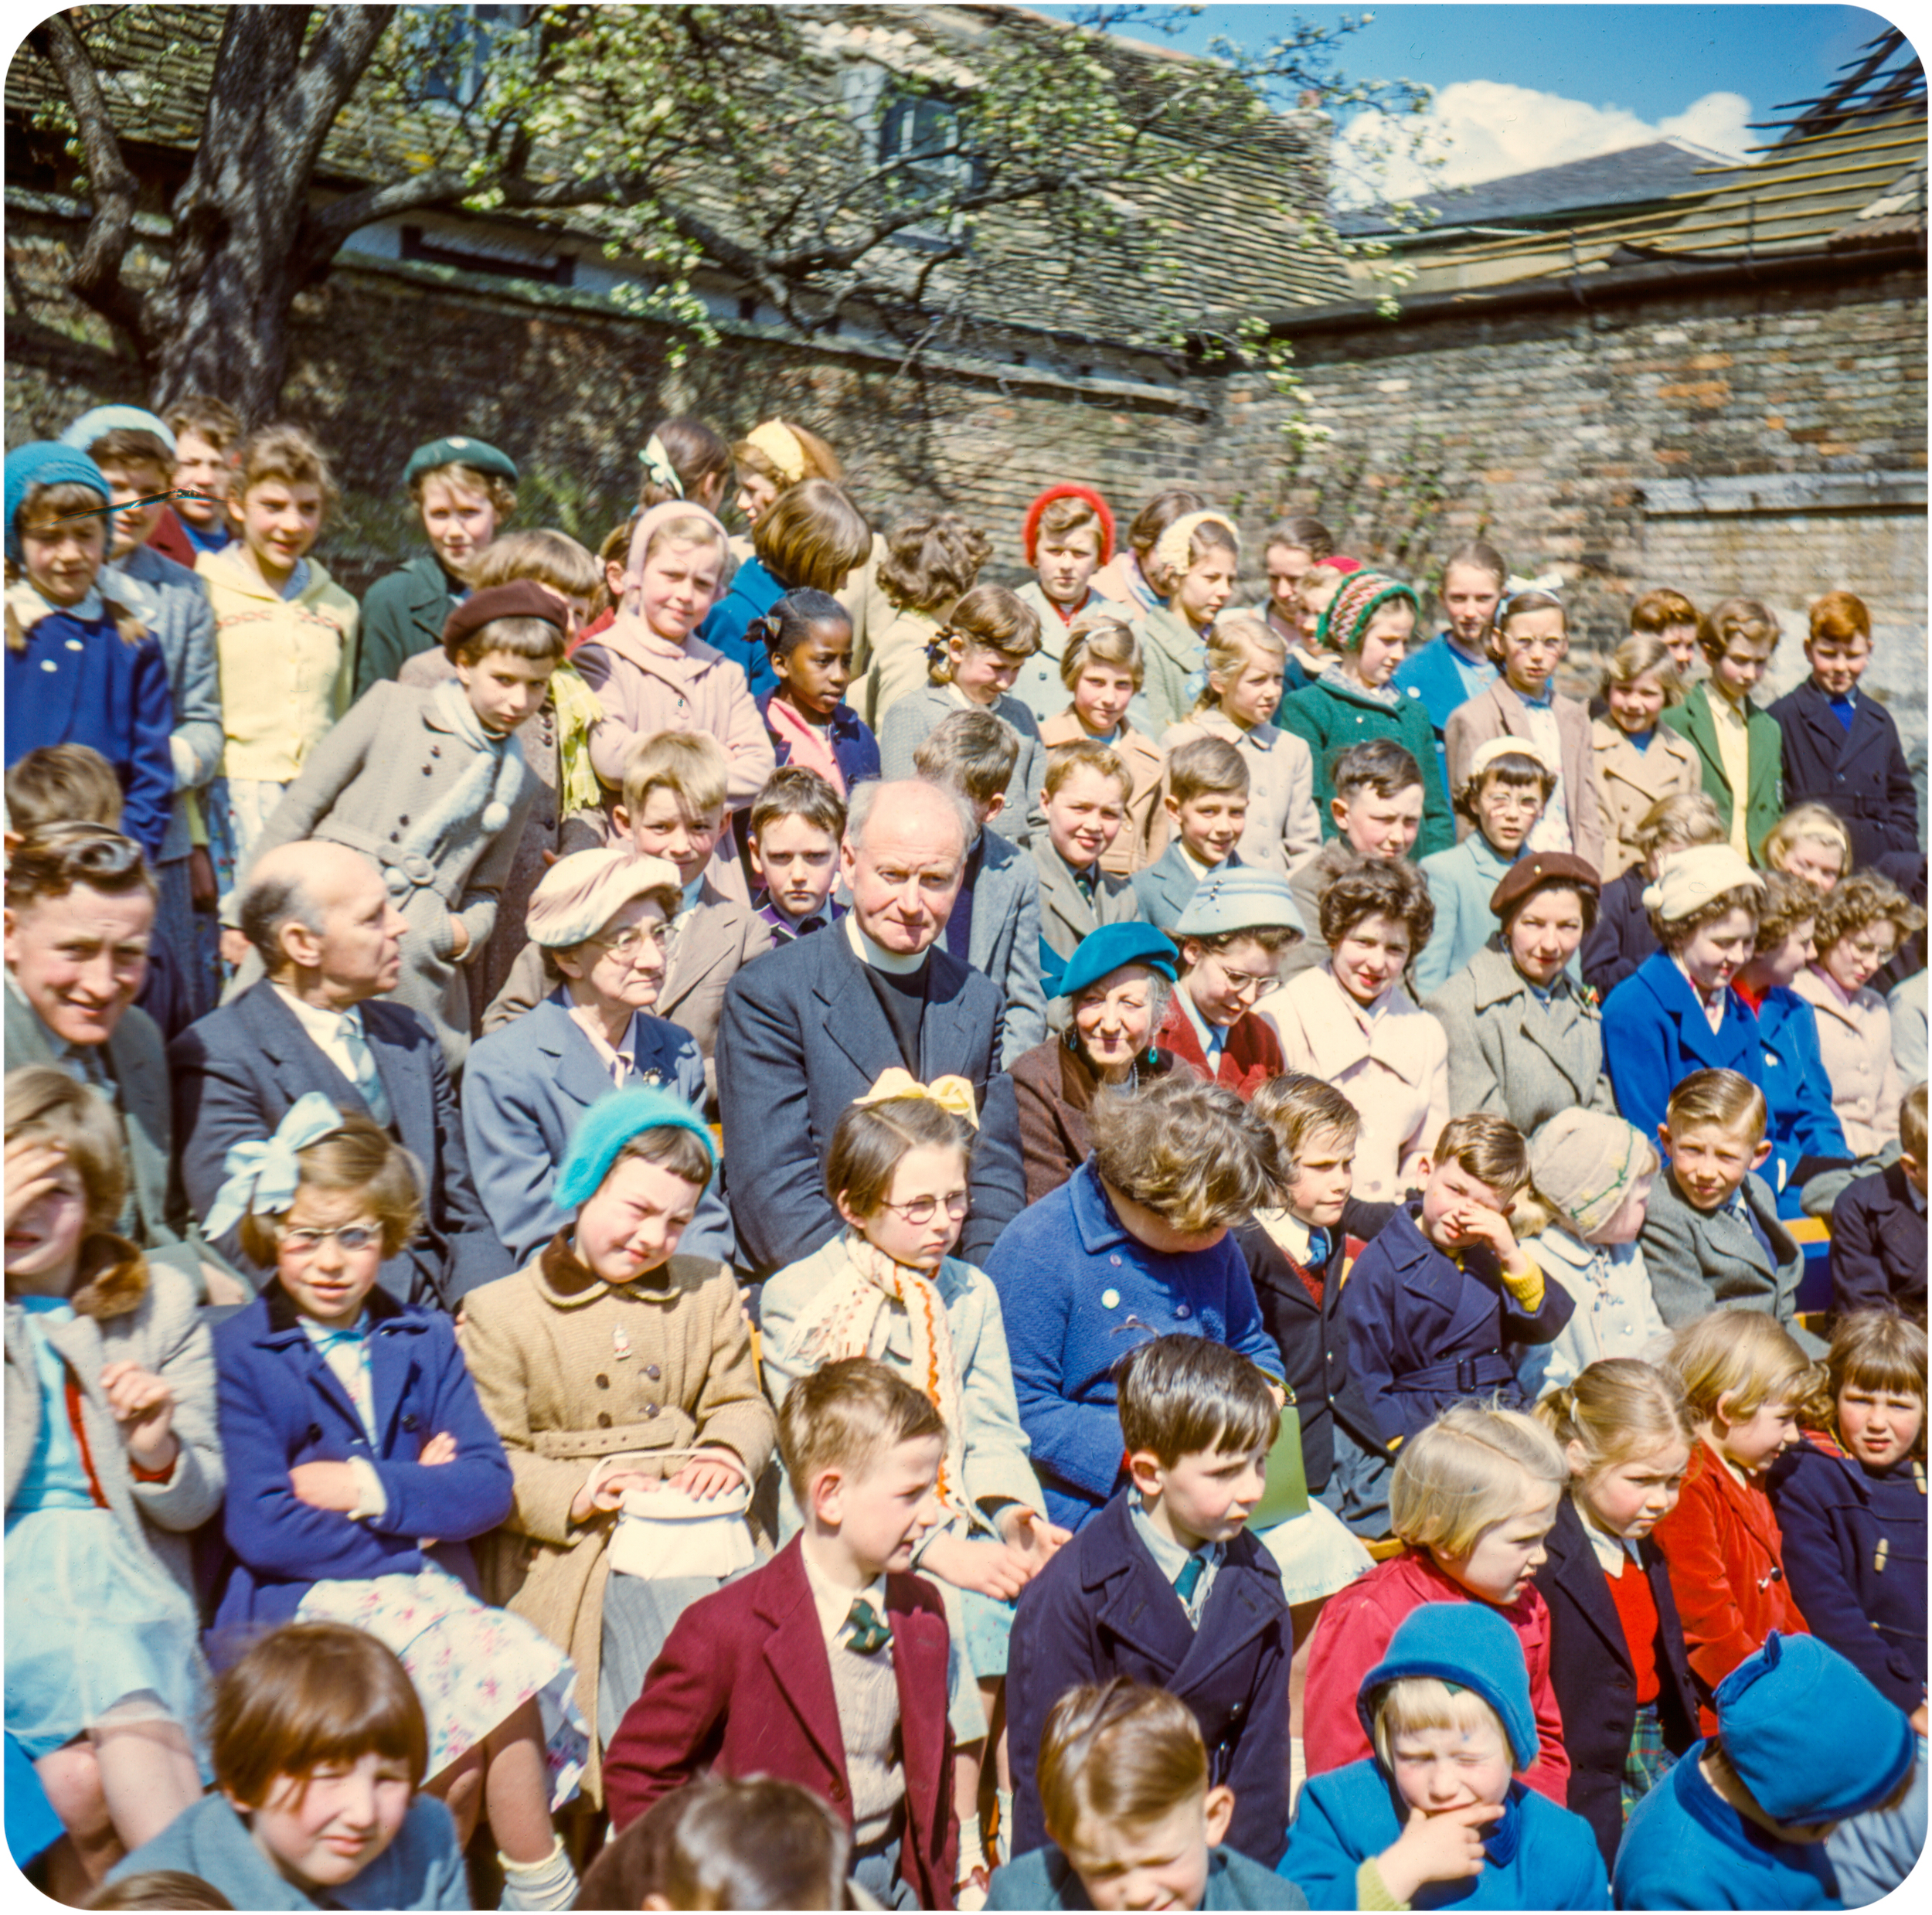 Sunday School - St. Ives Cornwall - May 1958